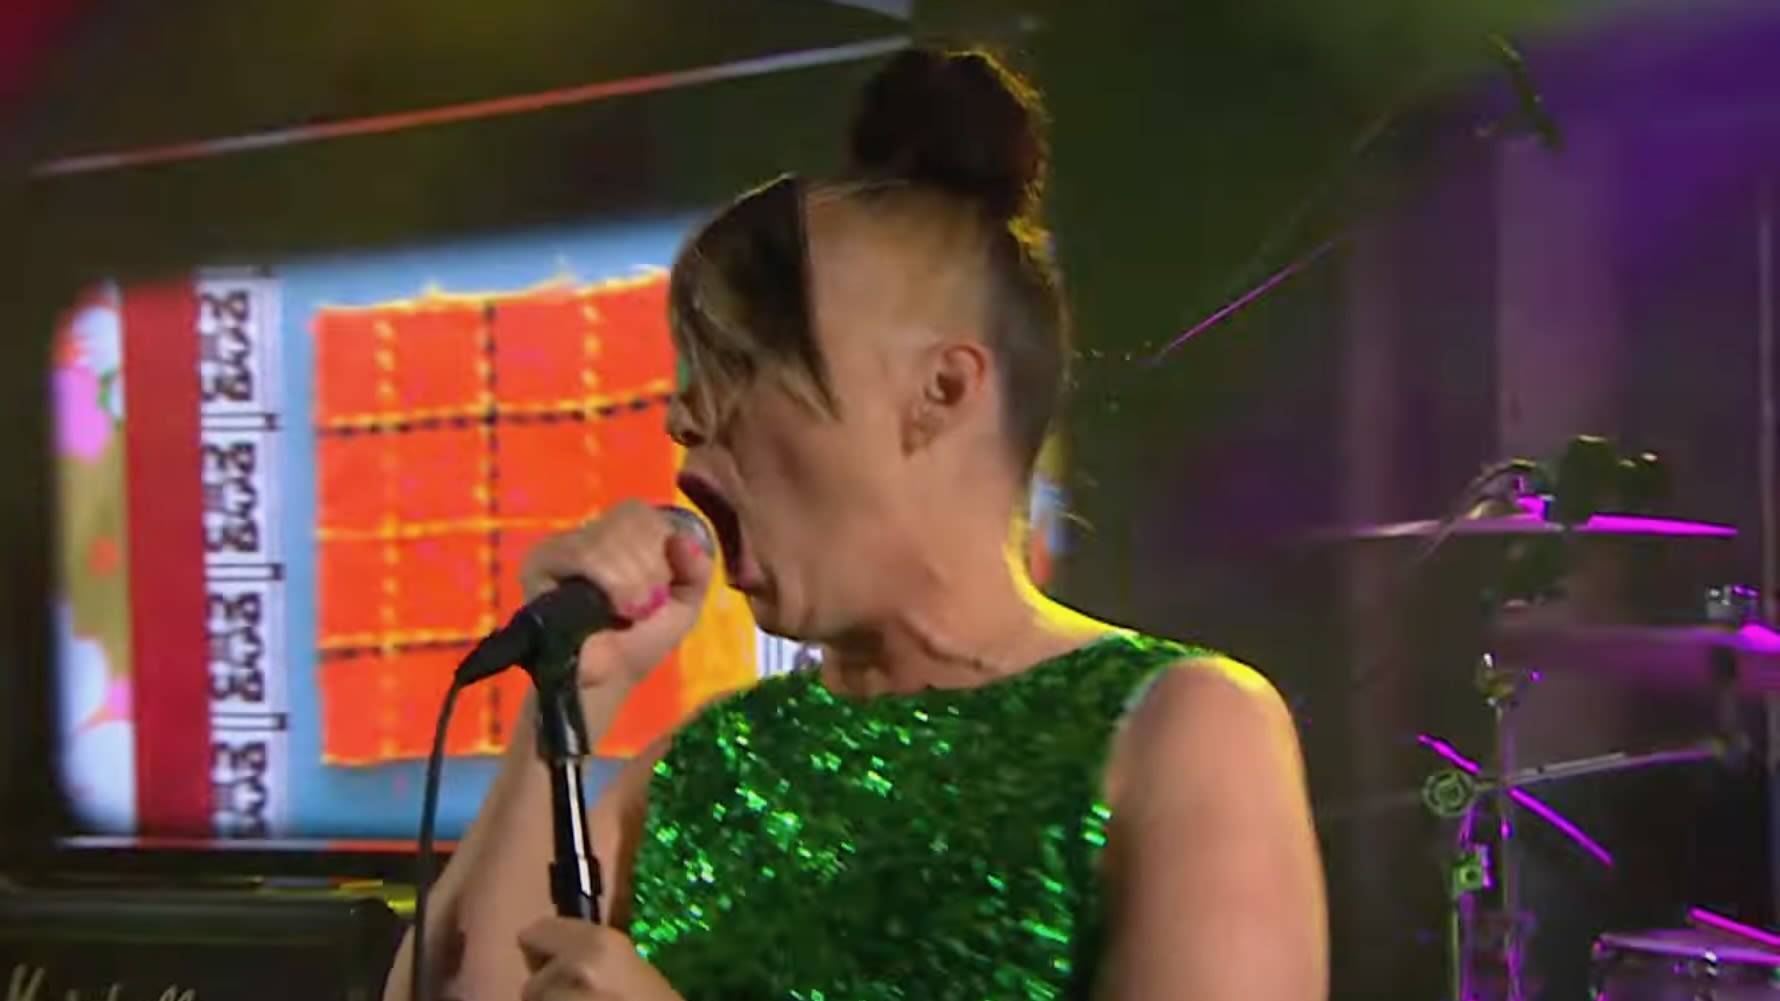 Bikini Kill Make TV Debut with Scorching Performance of “Rebel Girl” on Colbert: Watch